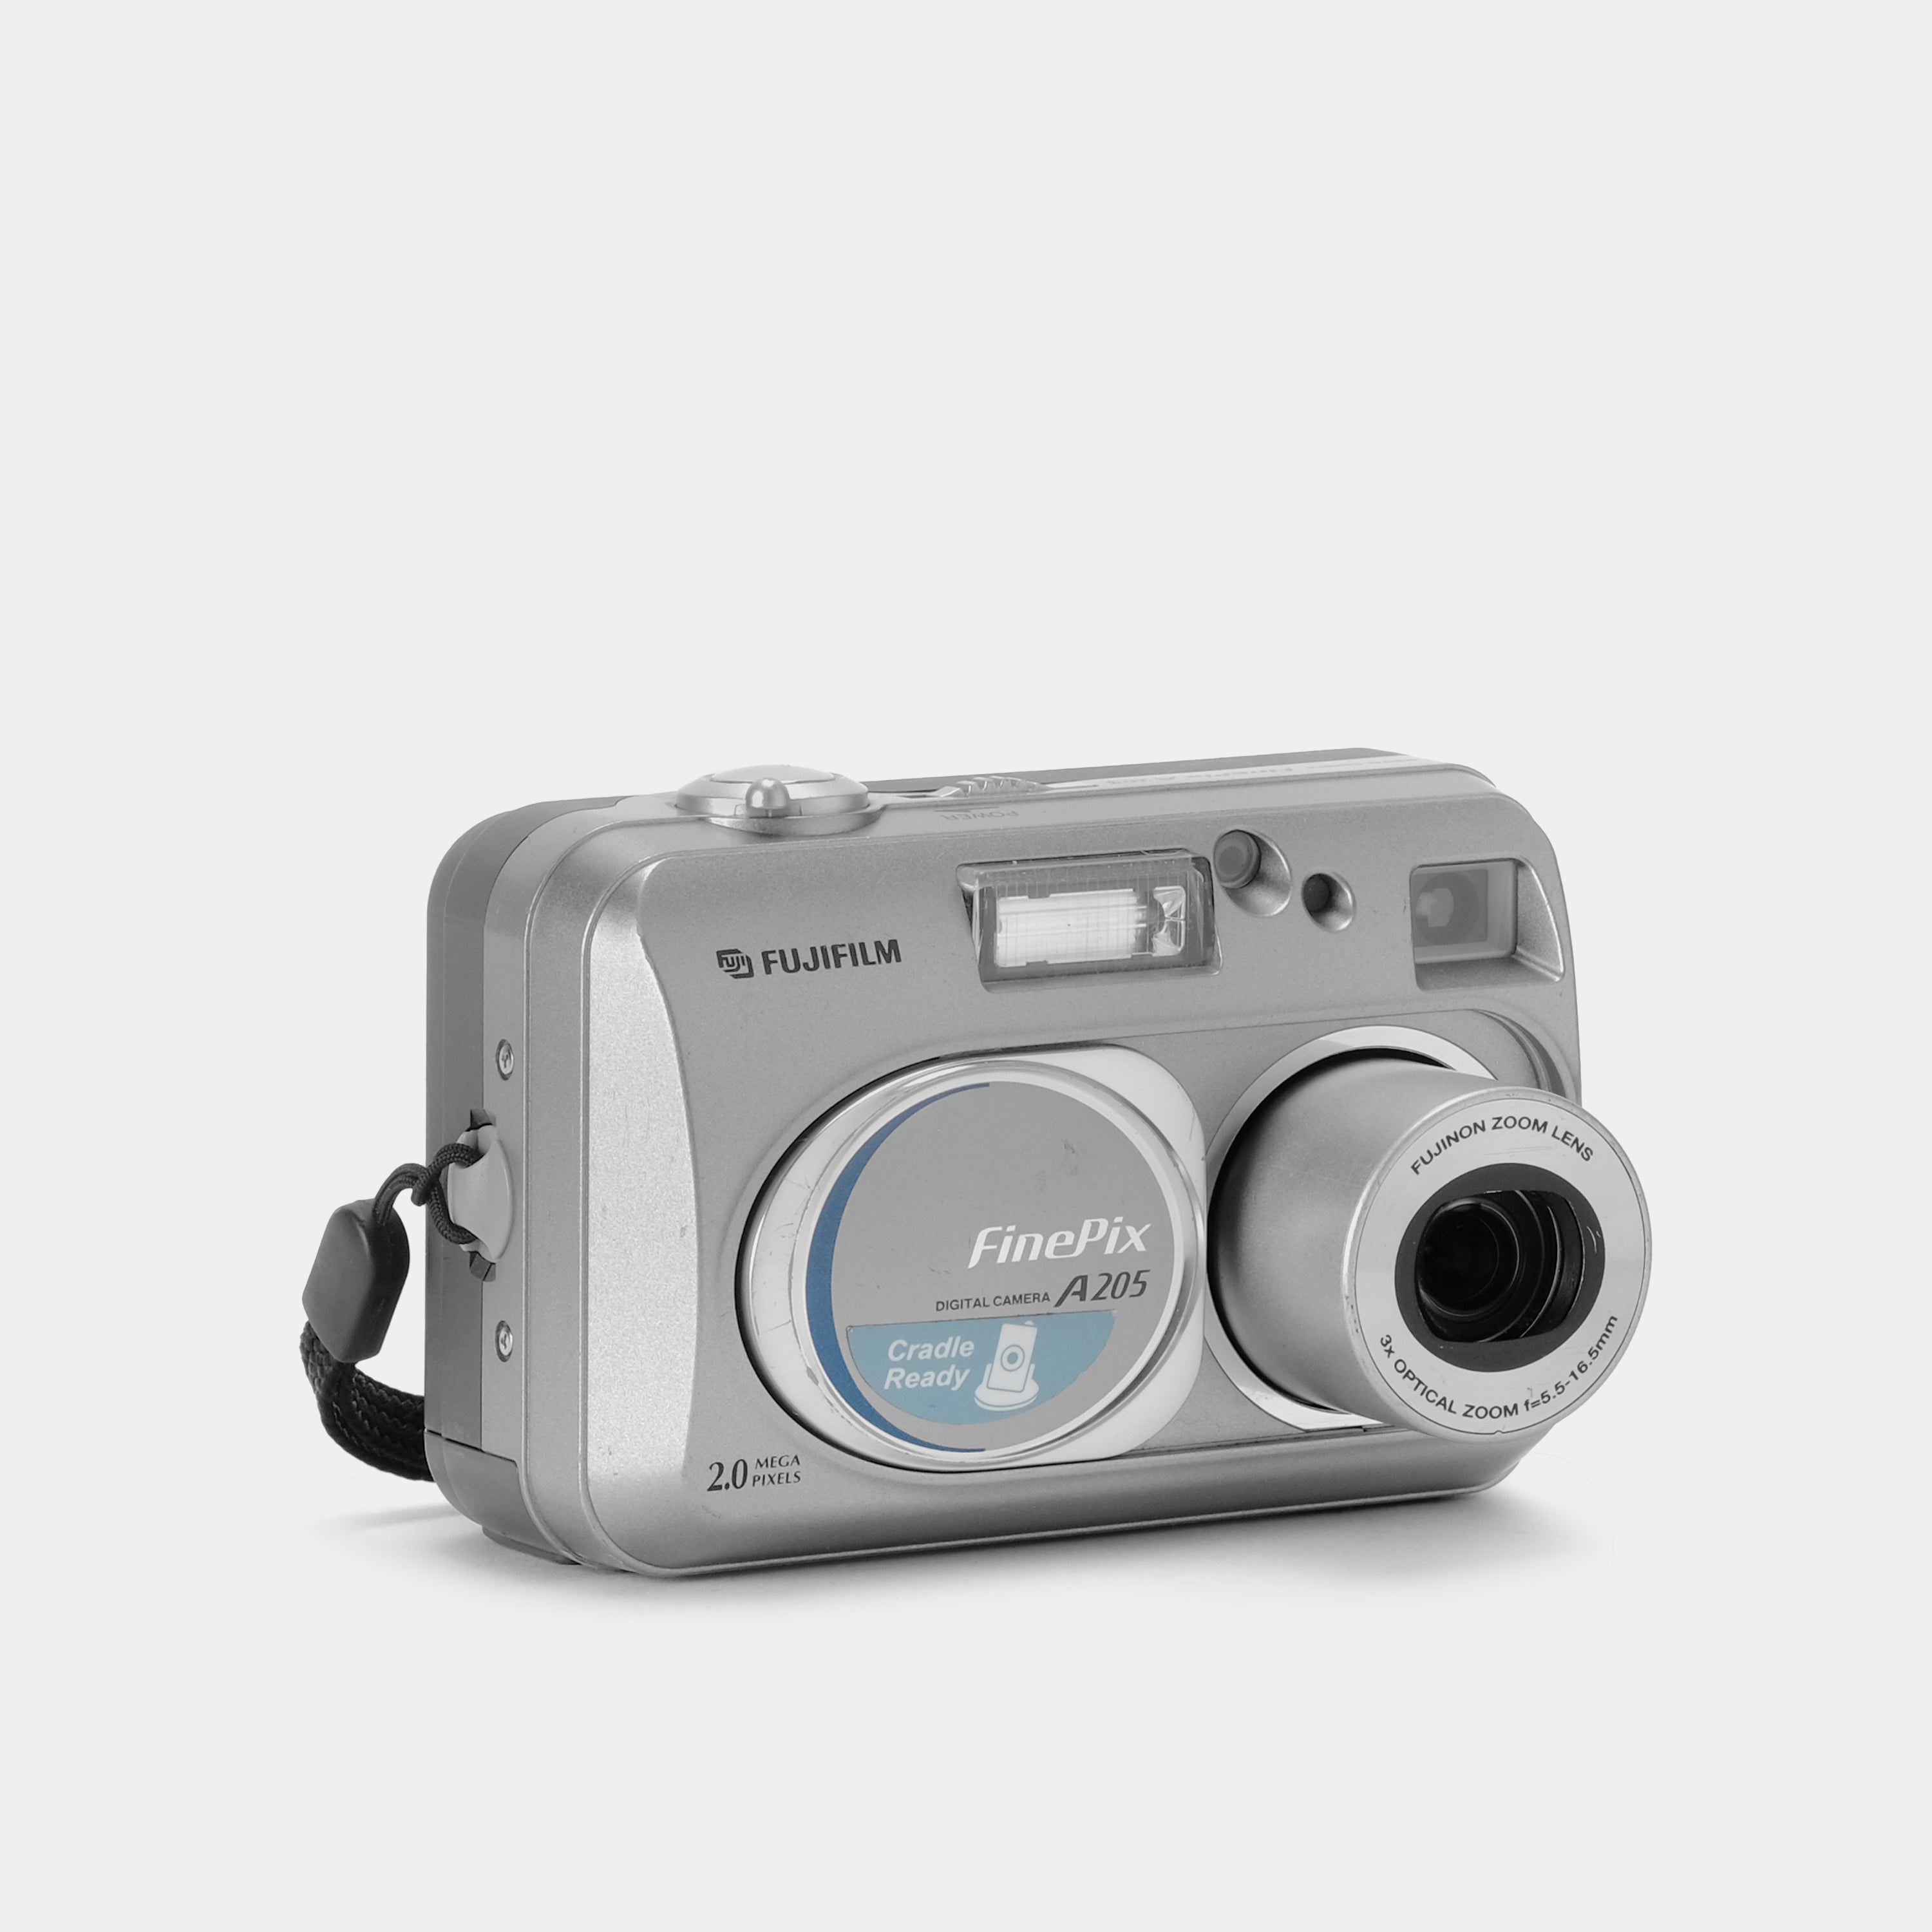 Fujifilm FinePix A205 Point and Shoot Digital Camera